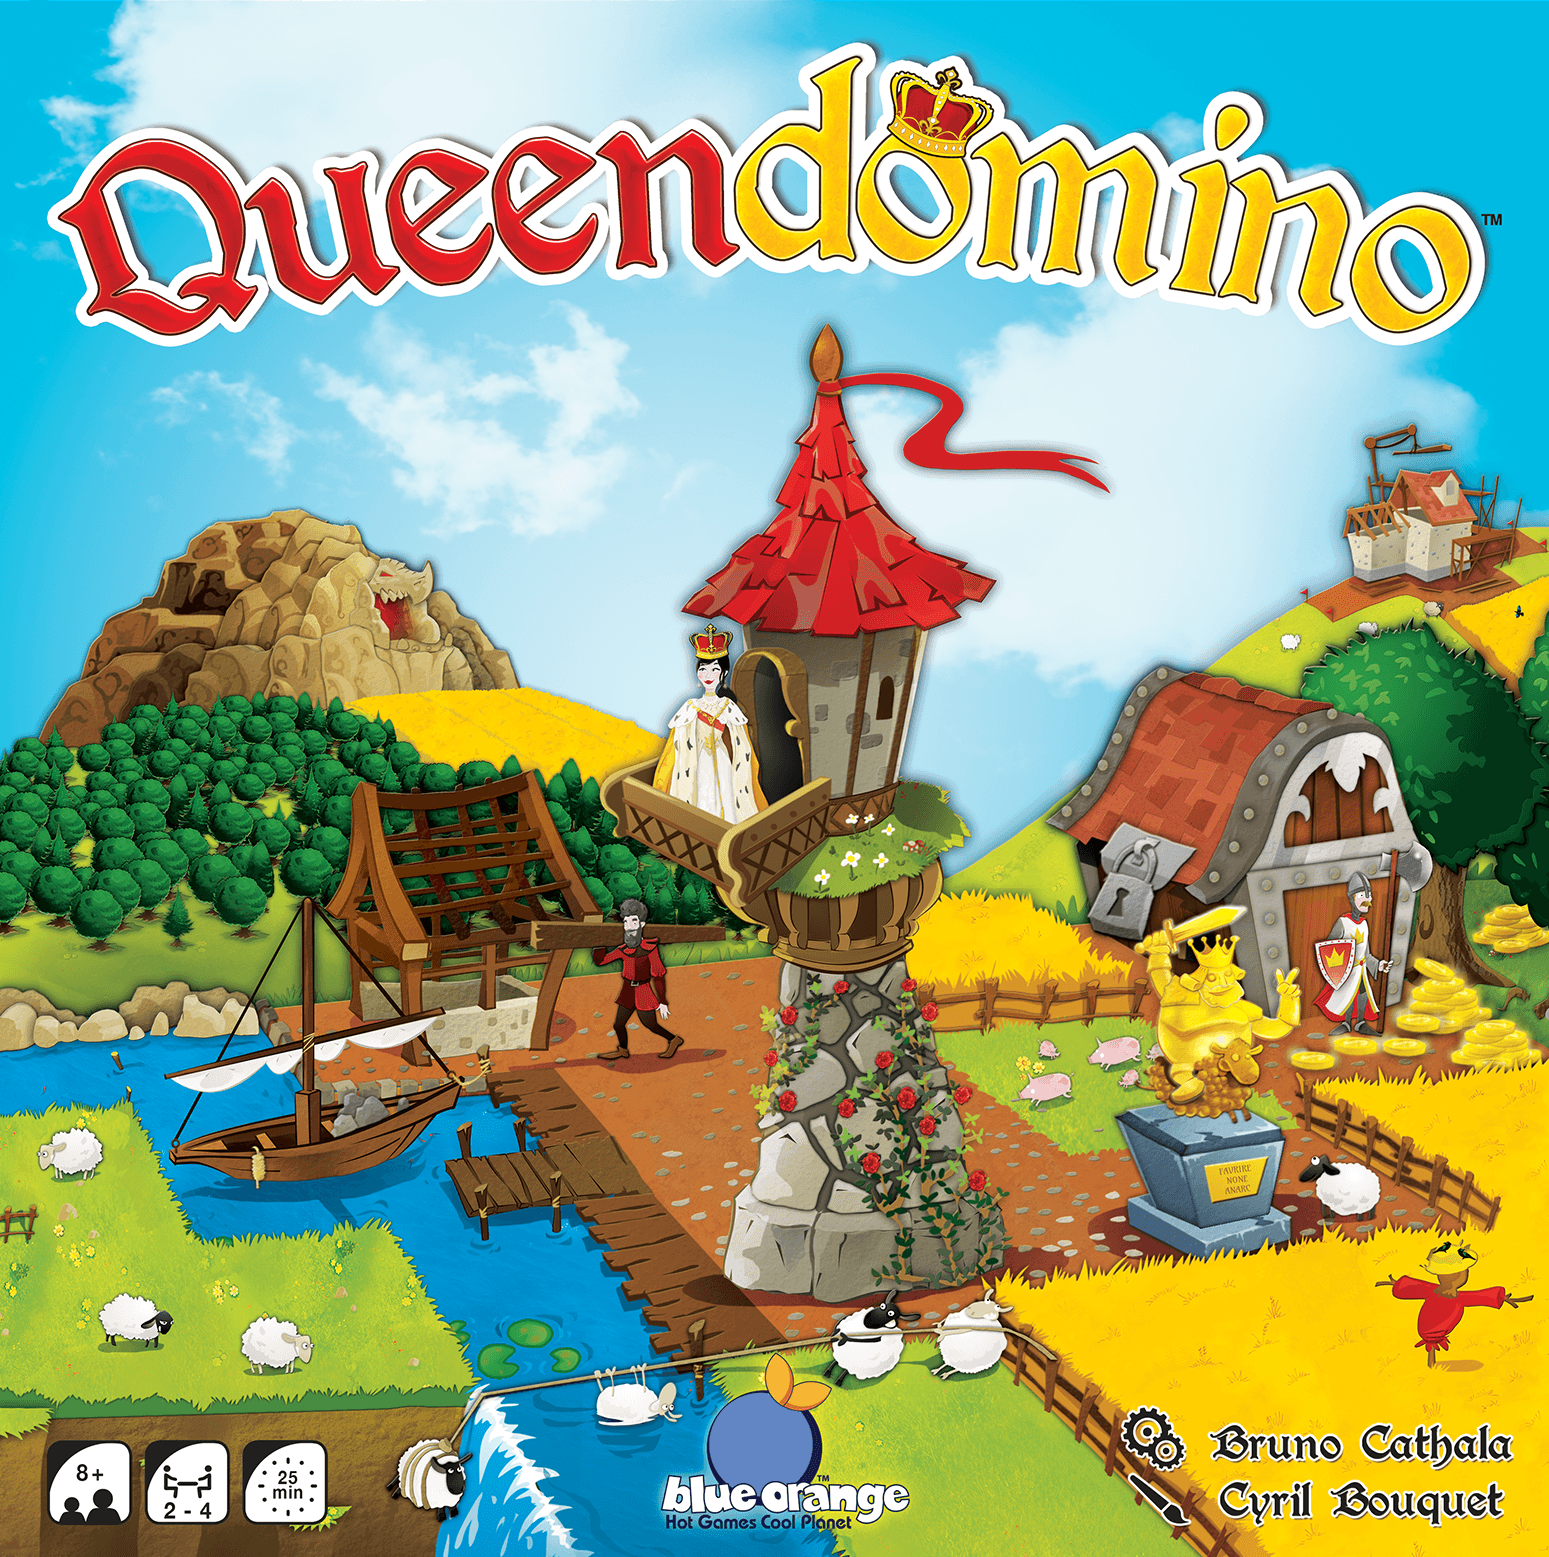 Queendomino (Retail Edition) 소매 보드 게임 Blackrock Games KS800552A